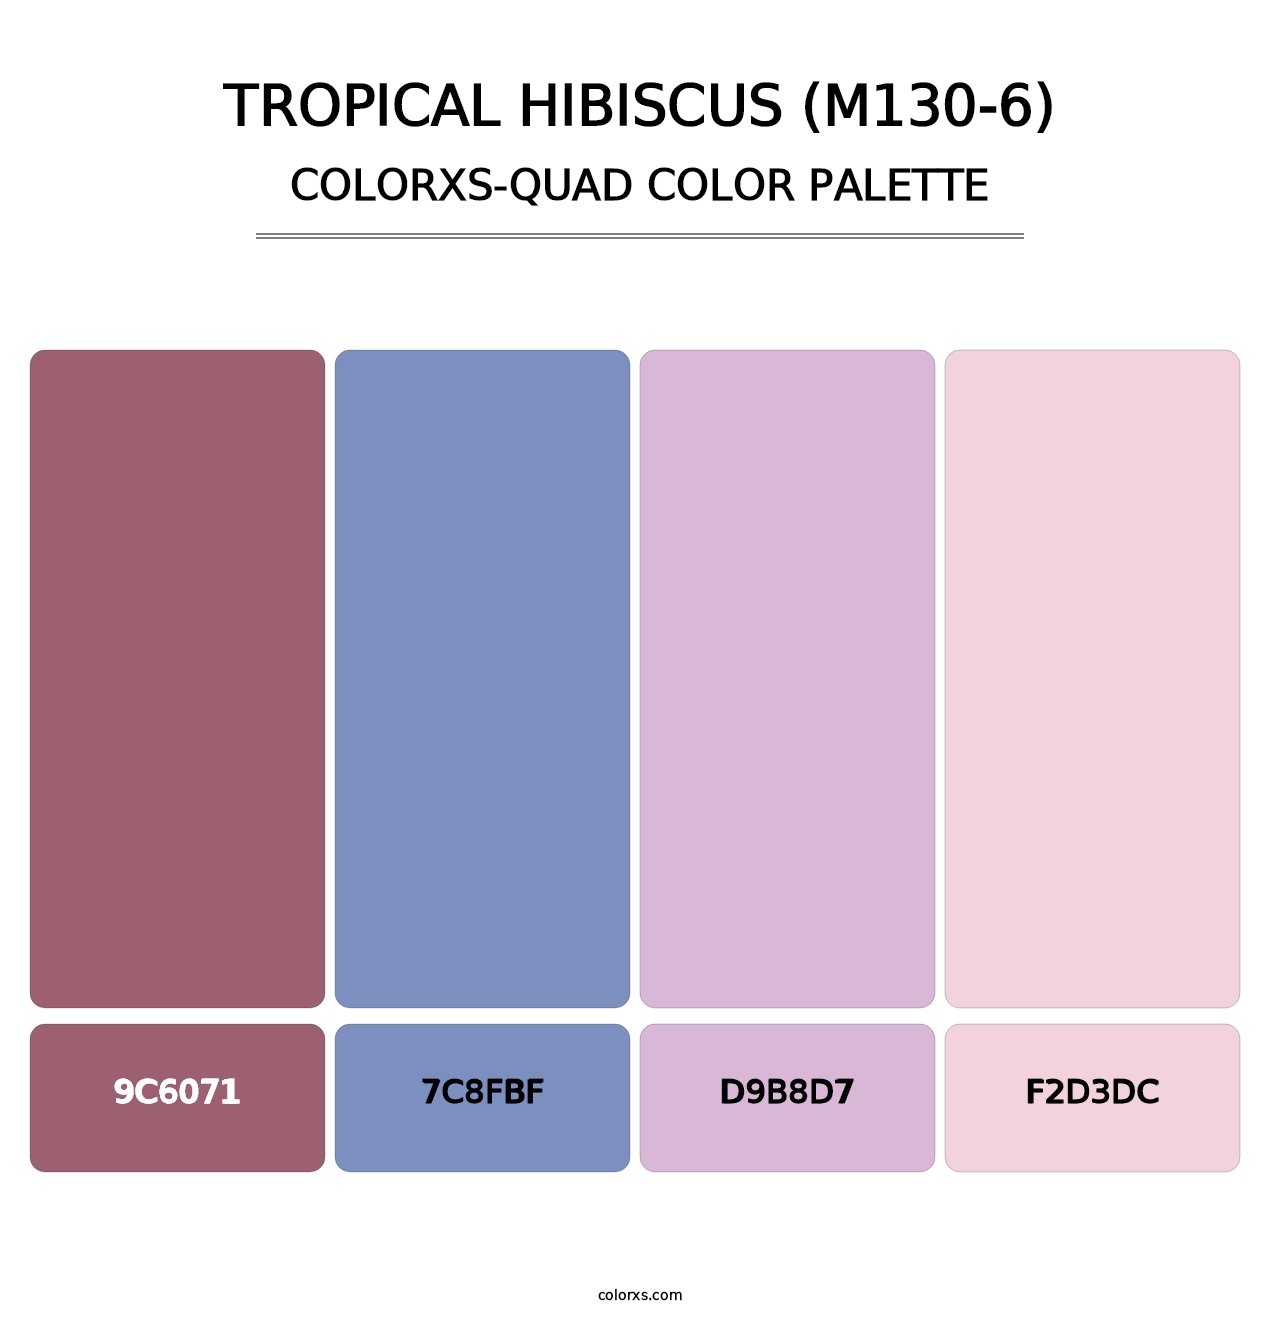 Tropical Hibiscus (M130-6) - Colorxs Quad Palette